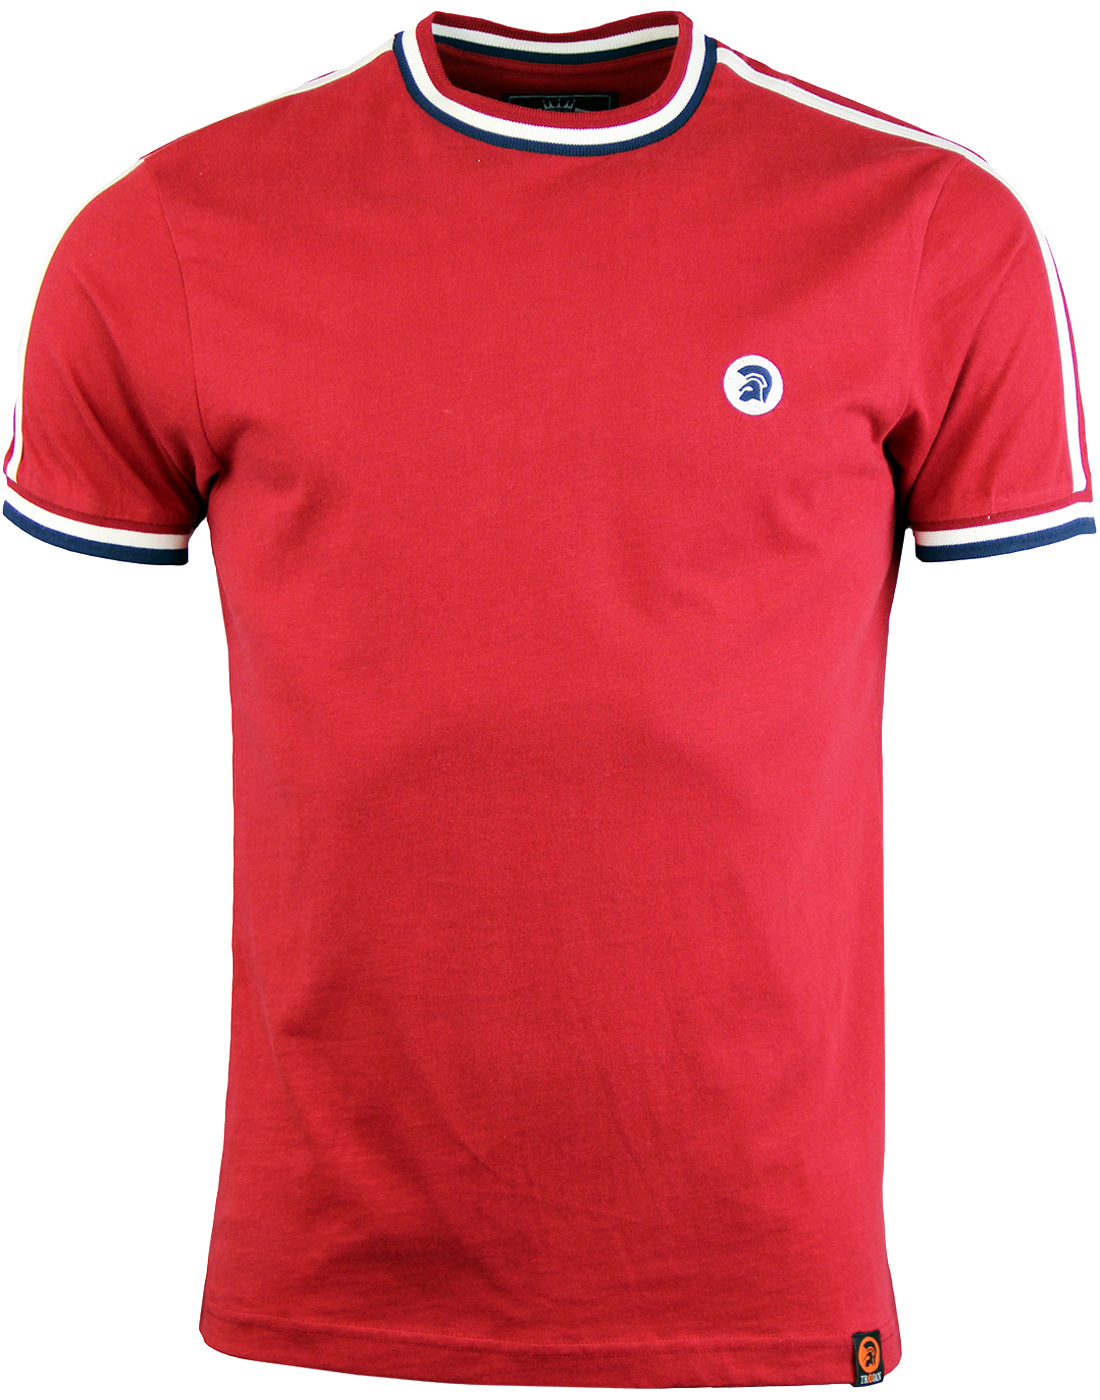 TROJAN RECORDS Mens Mod Twin Stripe 70s T-Shirt in Blood Red